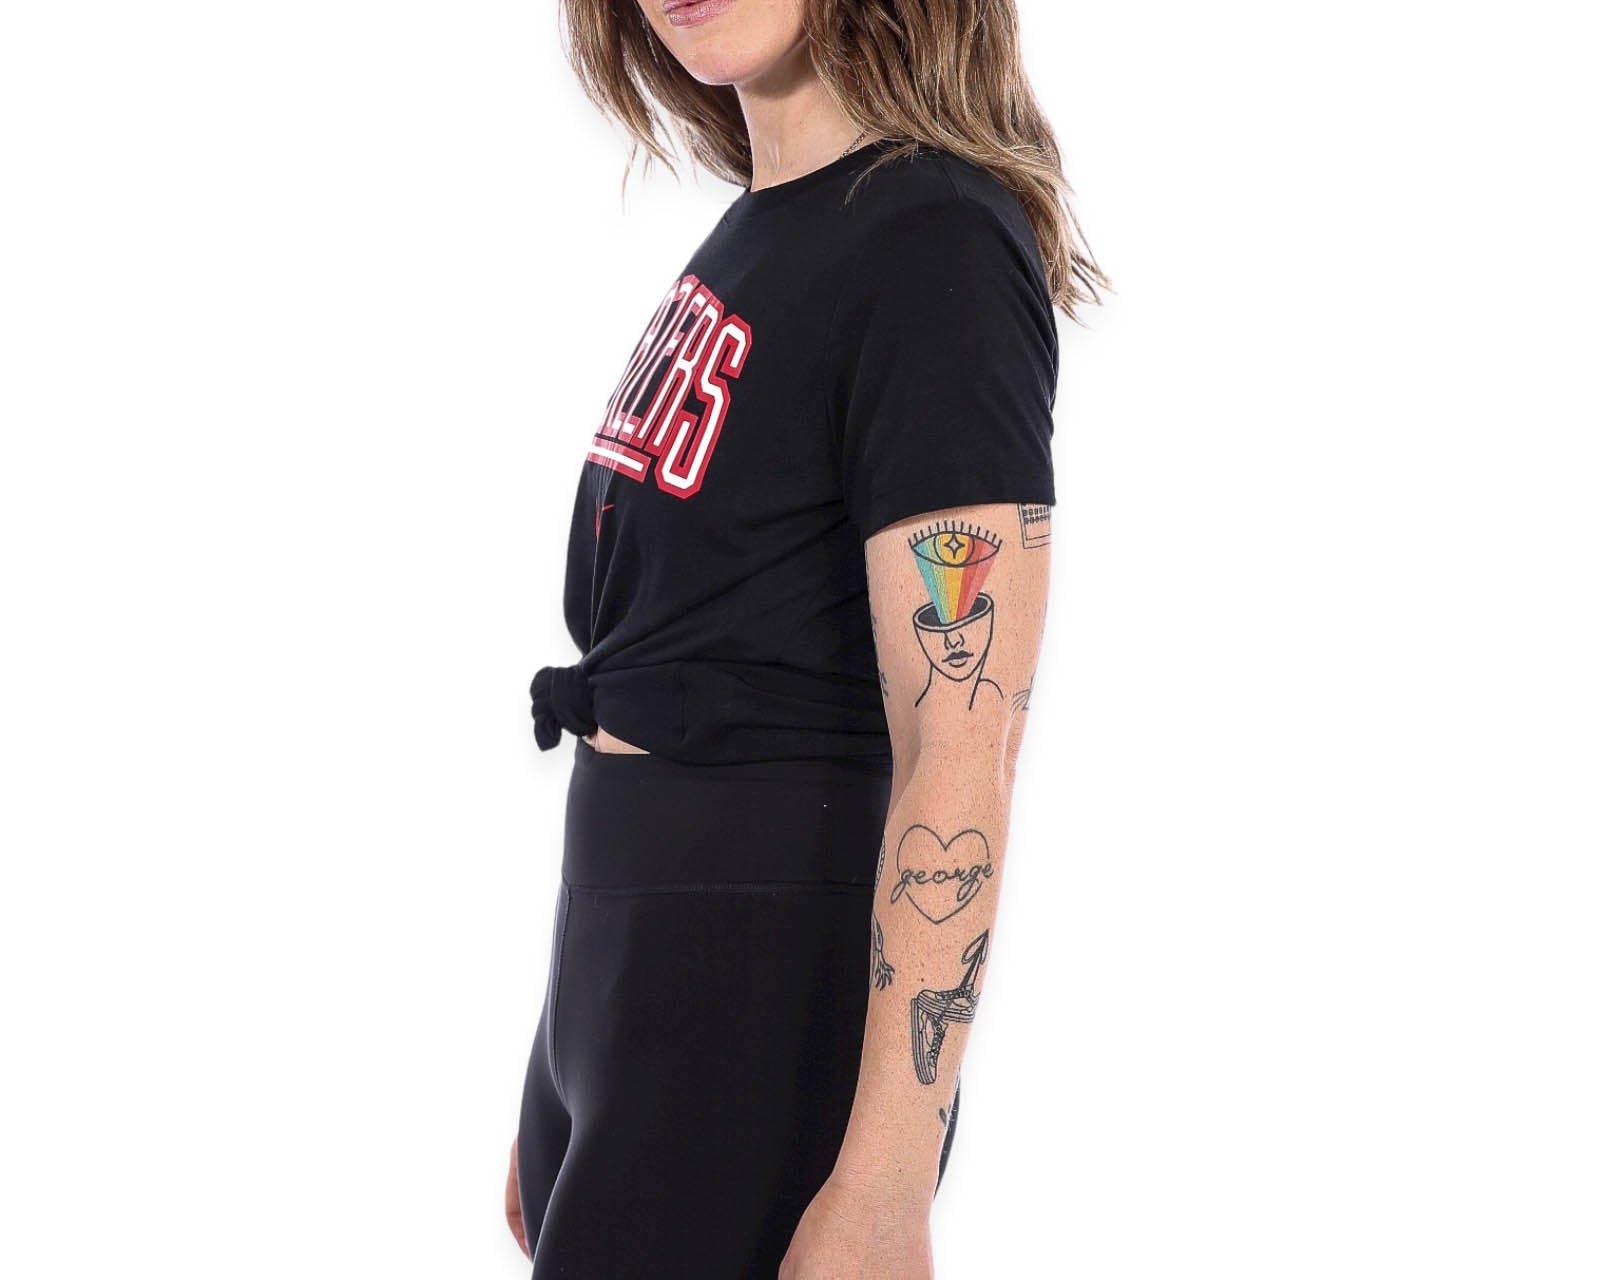 Portland Trail Blazers Nike Glow Women's Black T-Shirt